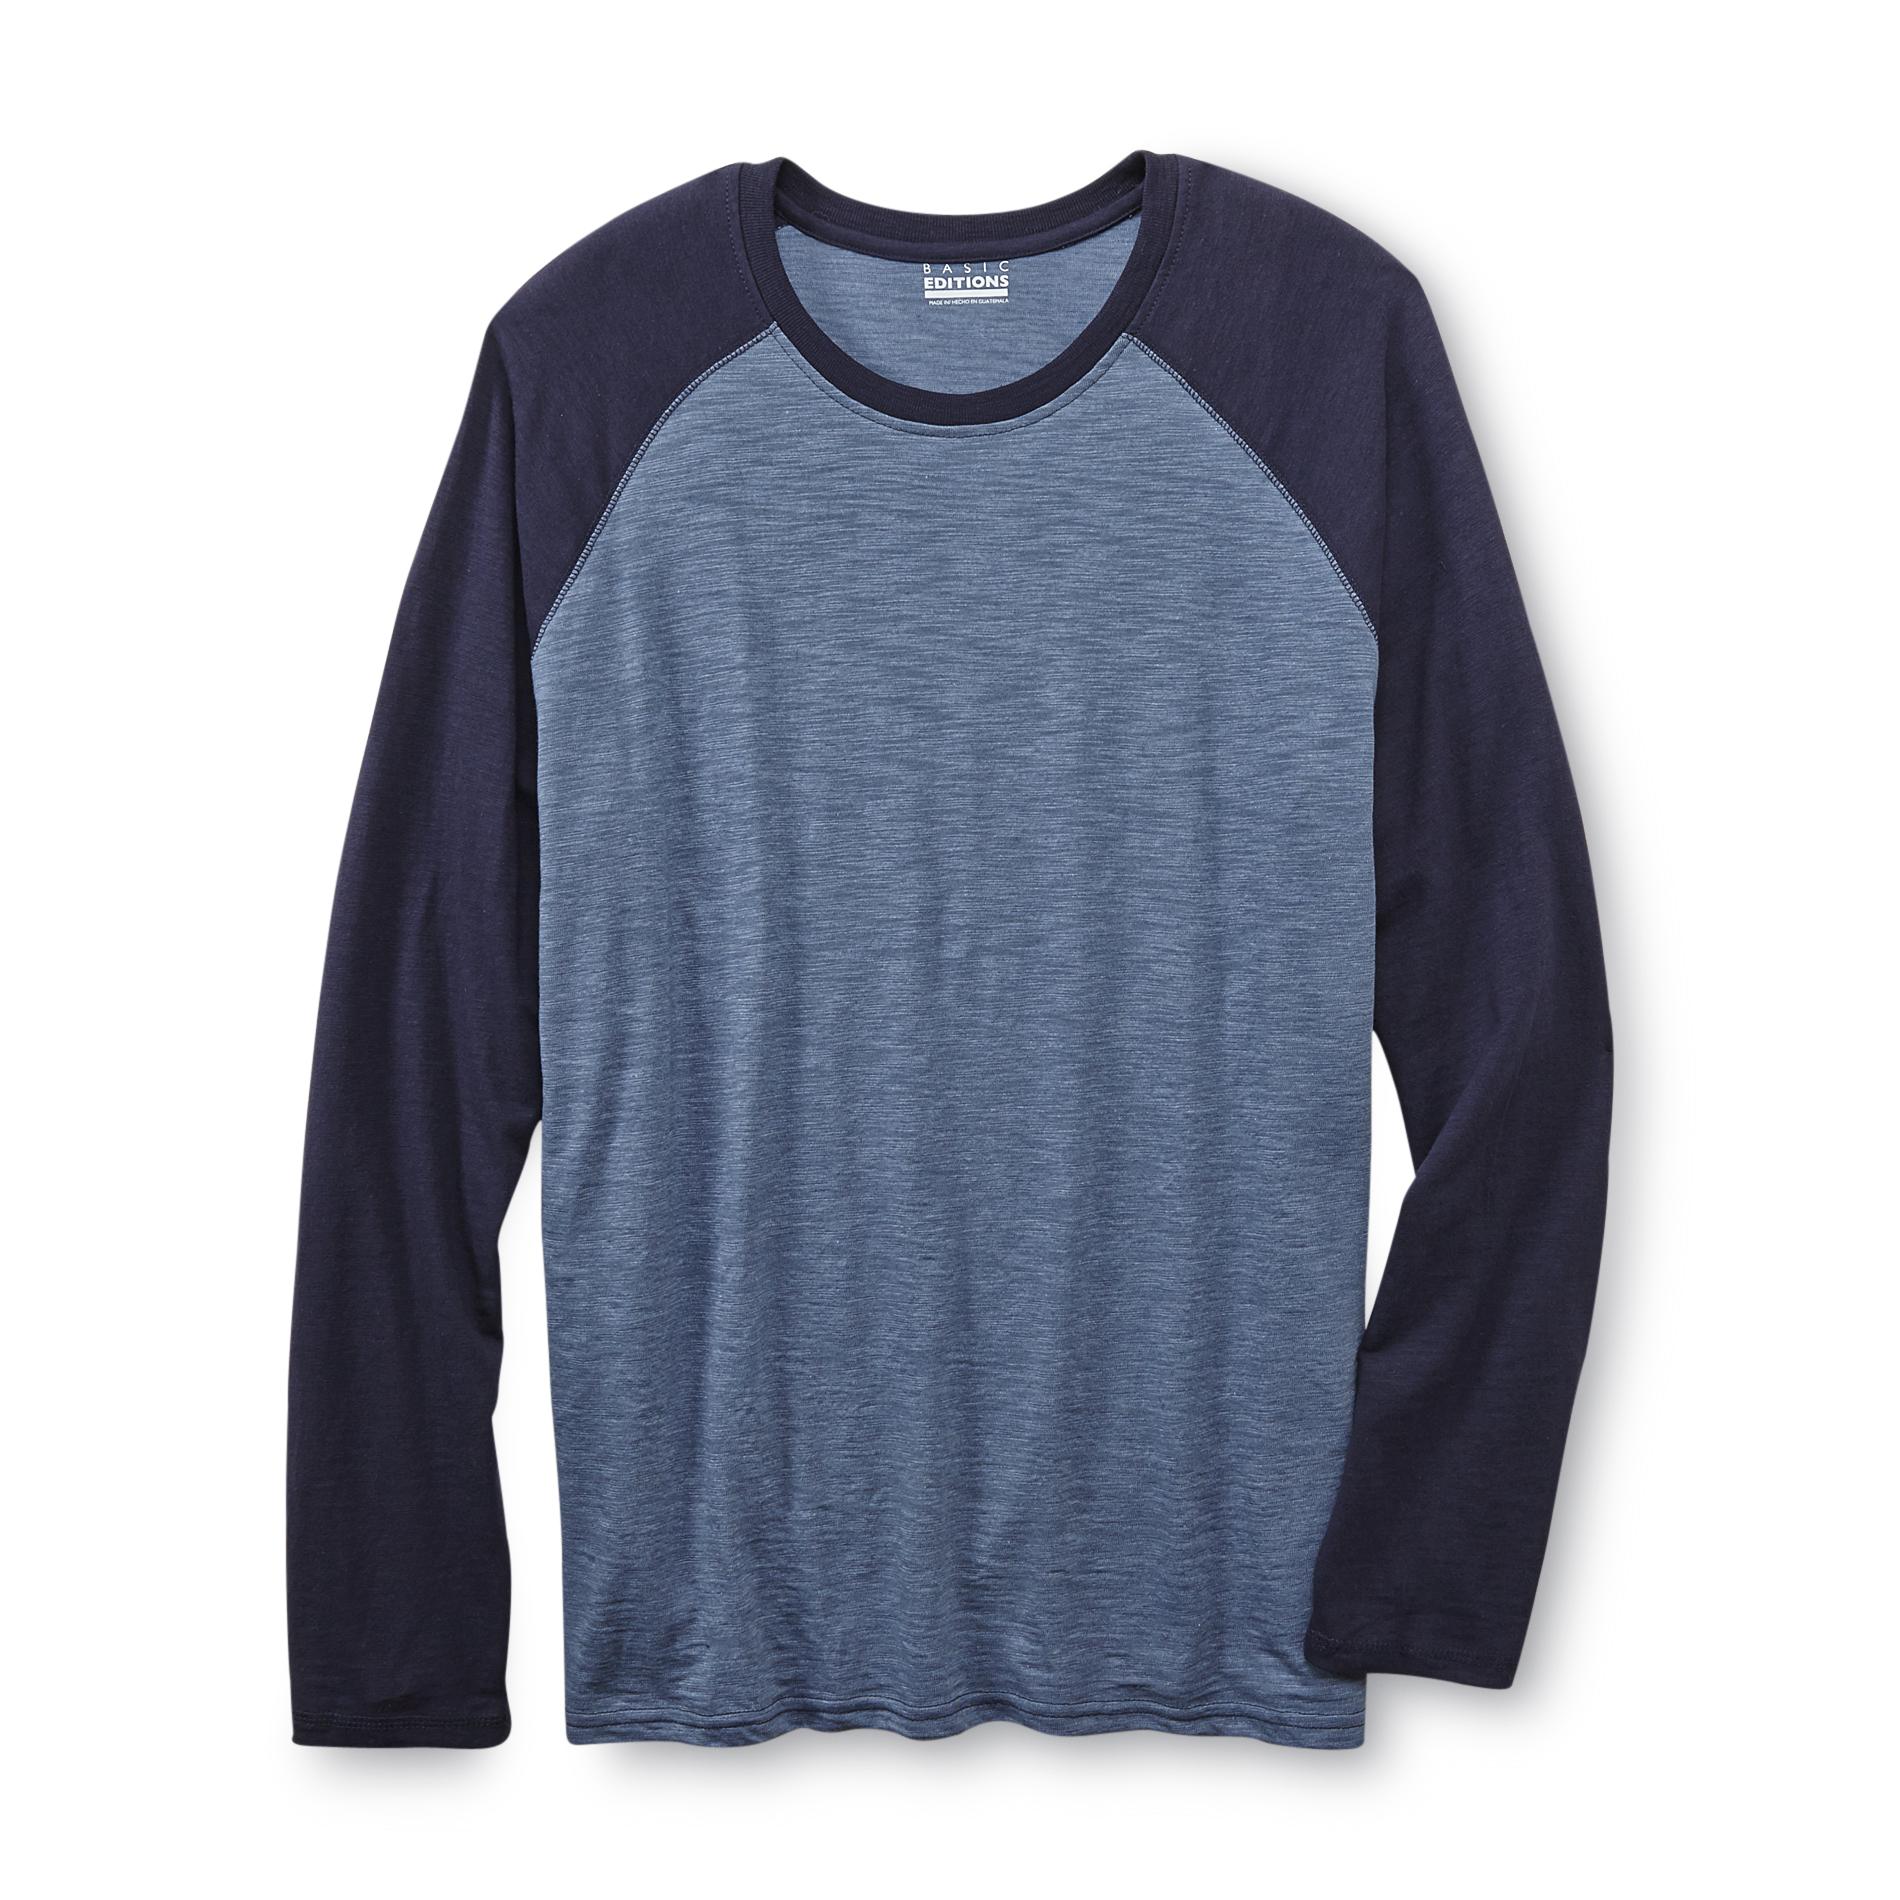 Basic Editions Men's Big & Tall Long-Sleeve T-Shirt - Heathered Colorblock